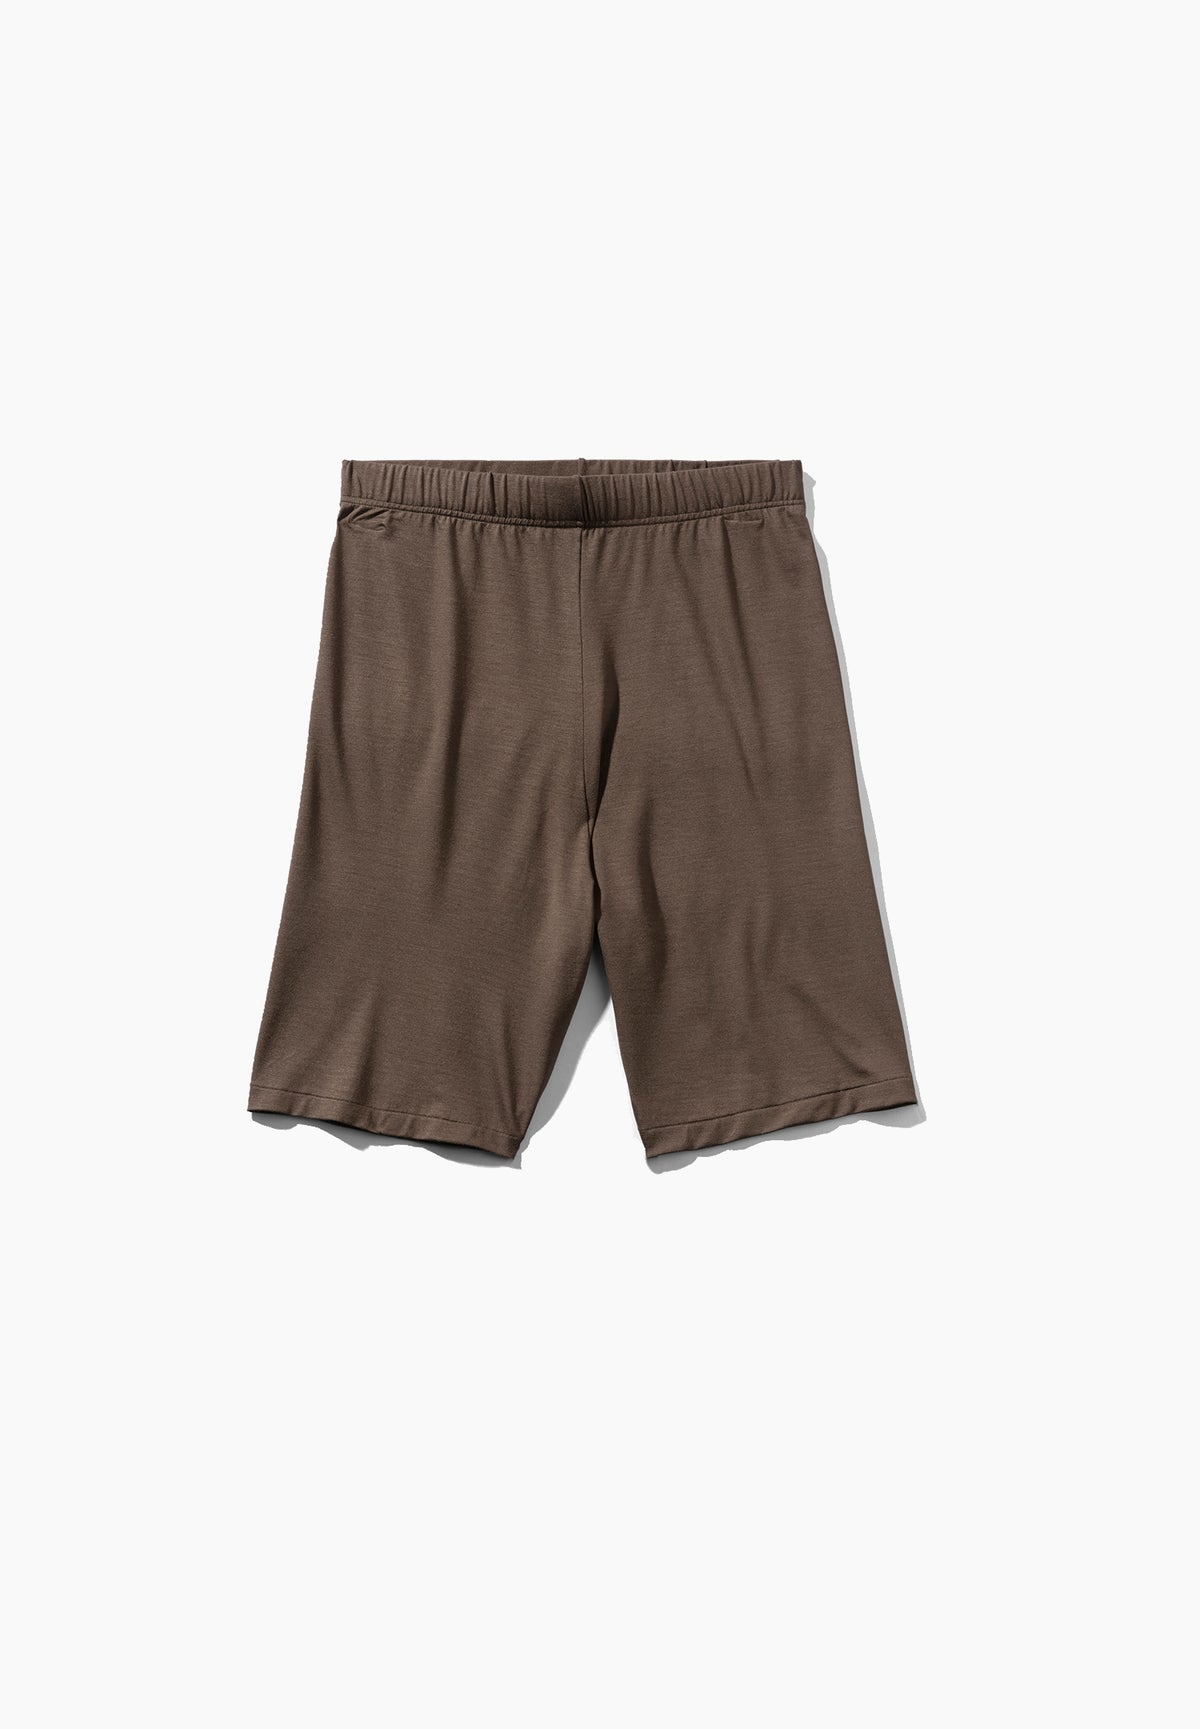 Pureness | Shorts - major brown